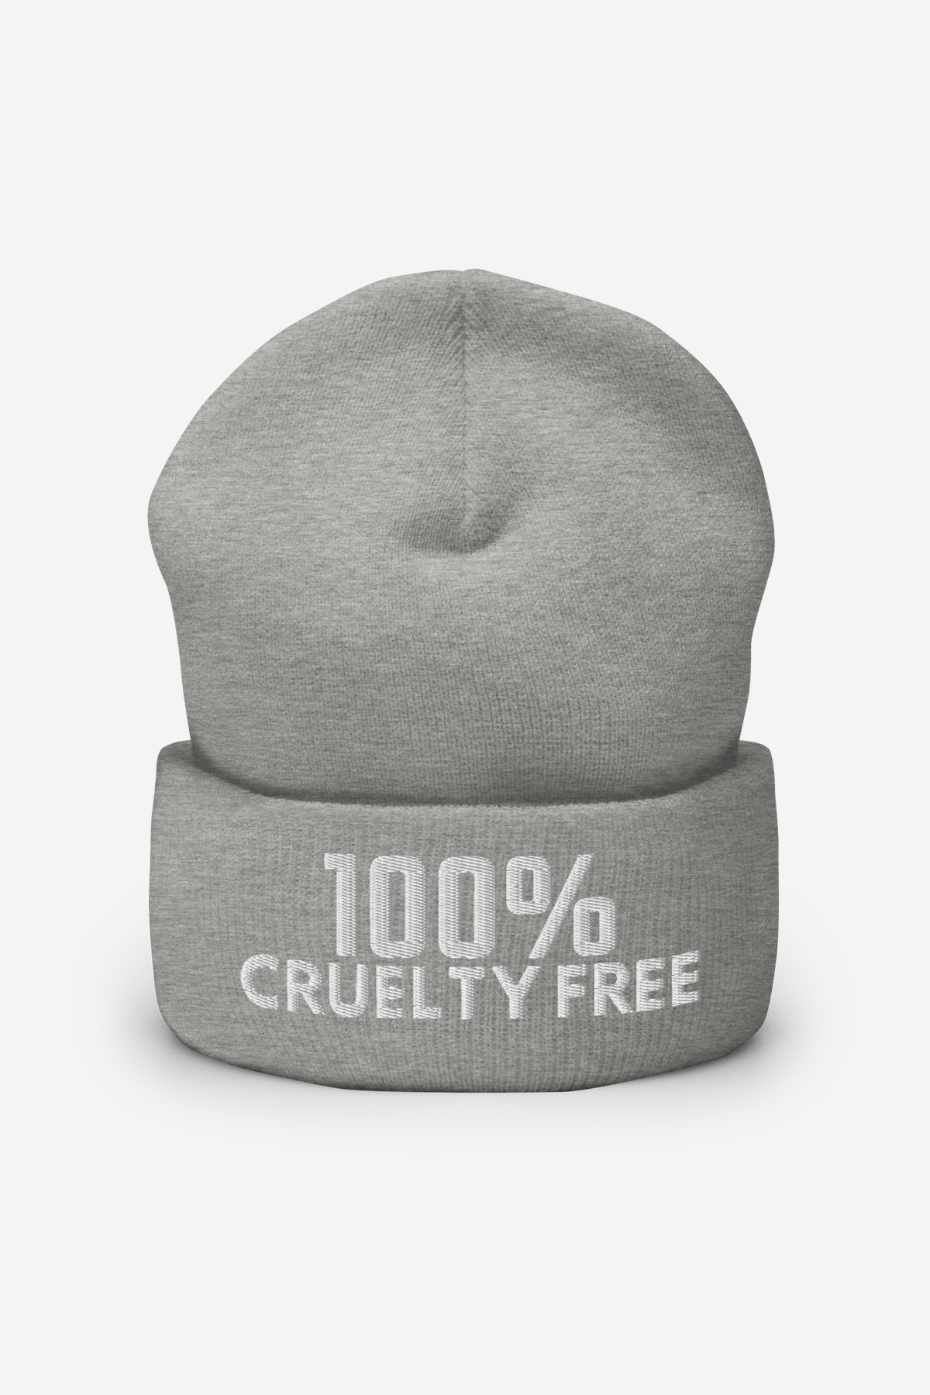 100% Cruelty Free Cuffed Beanie